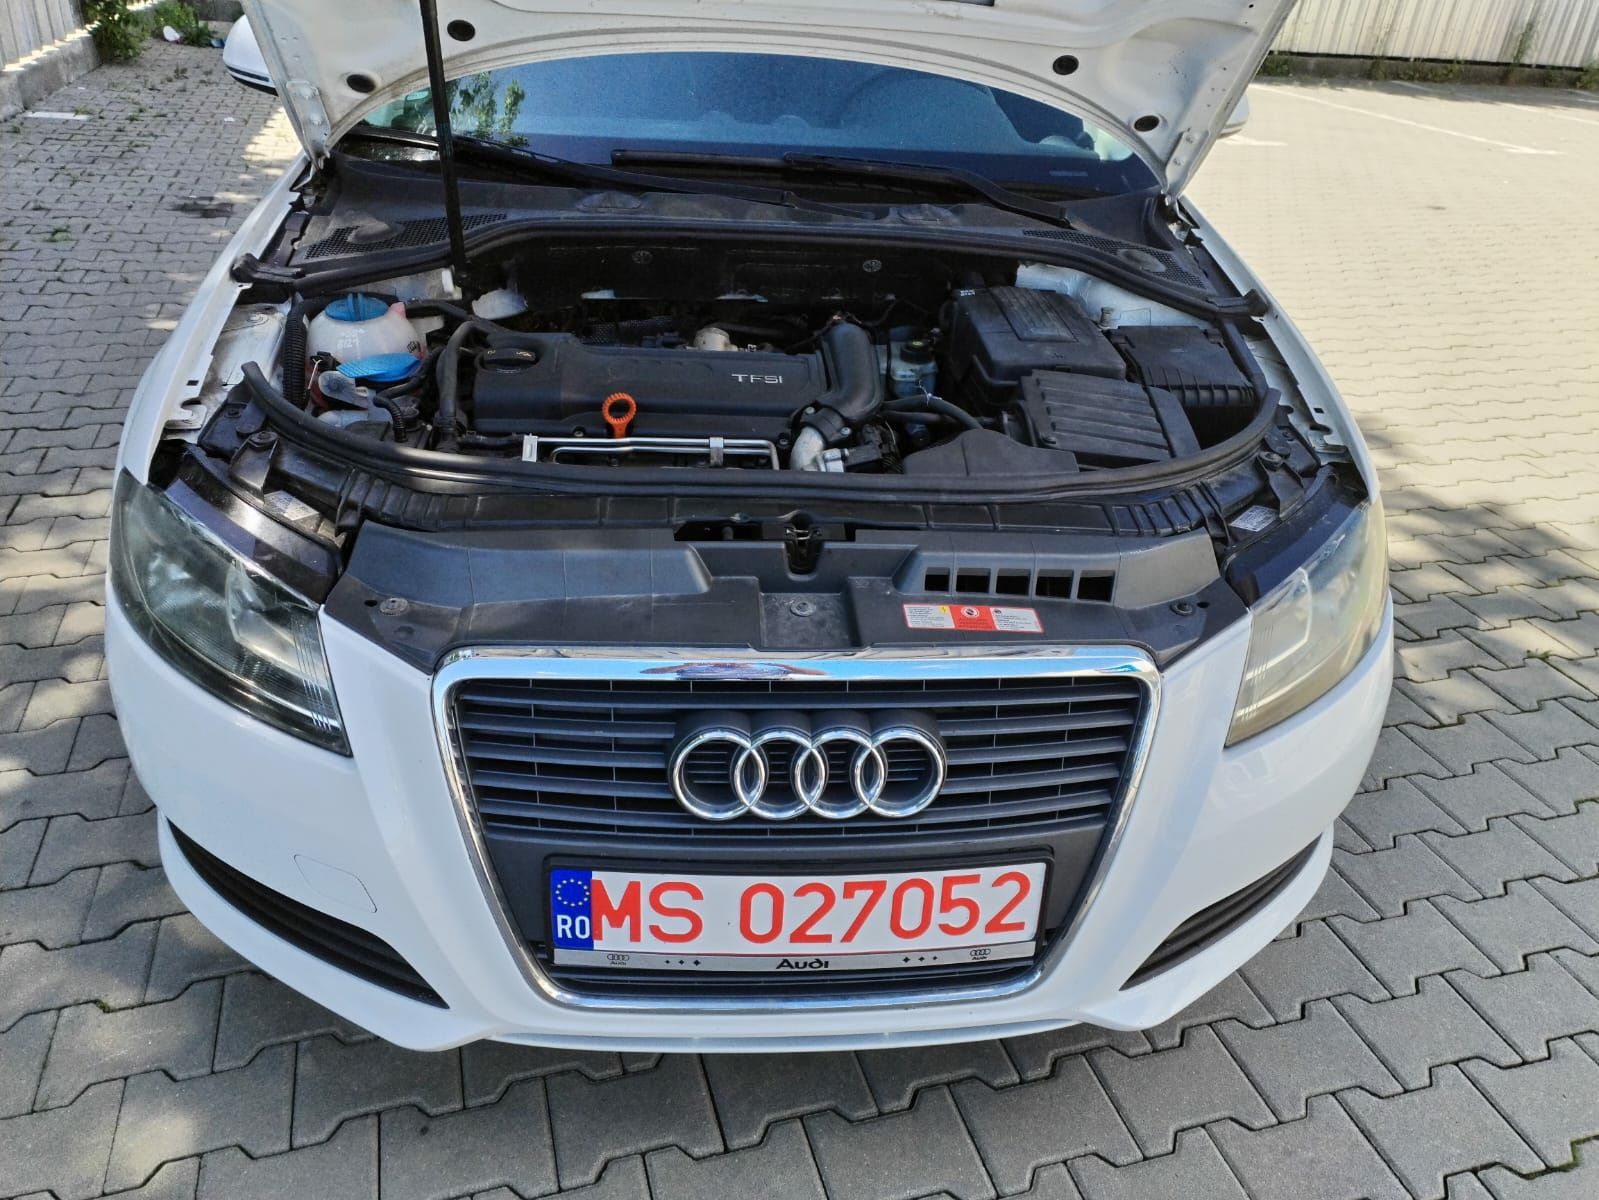 Audi A3 1.4 tfsi, 2010, euro 5